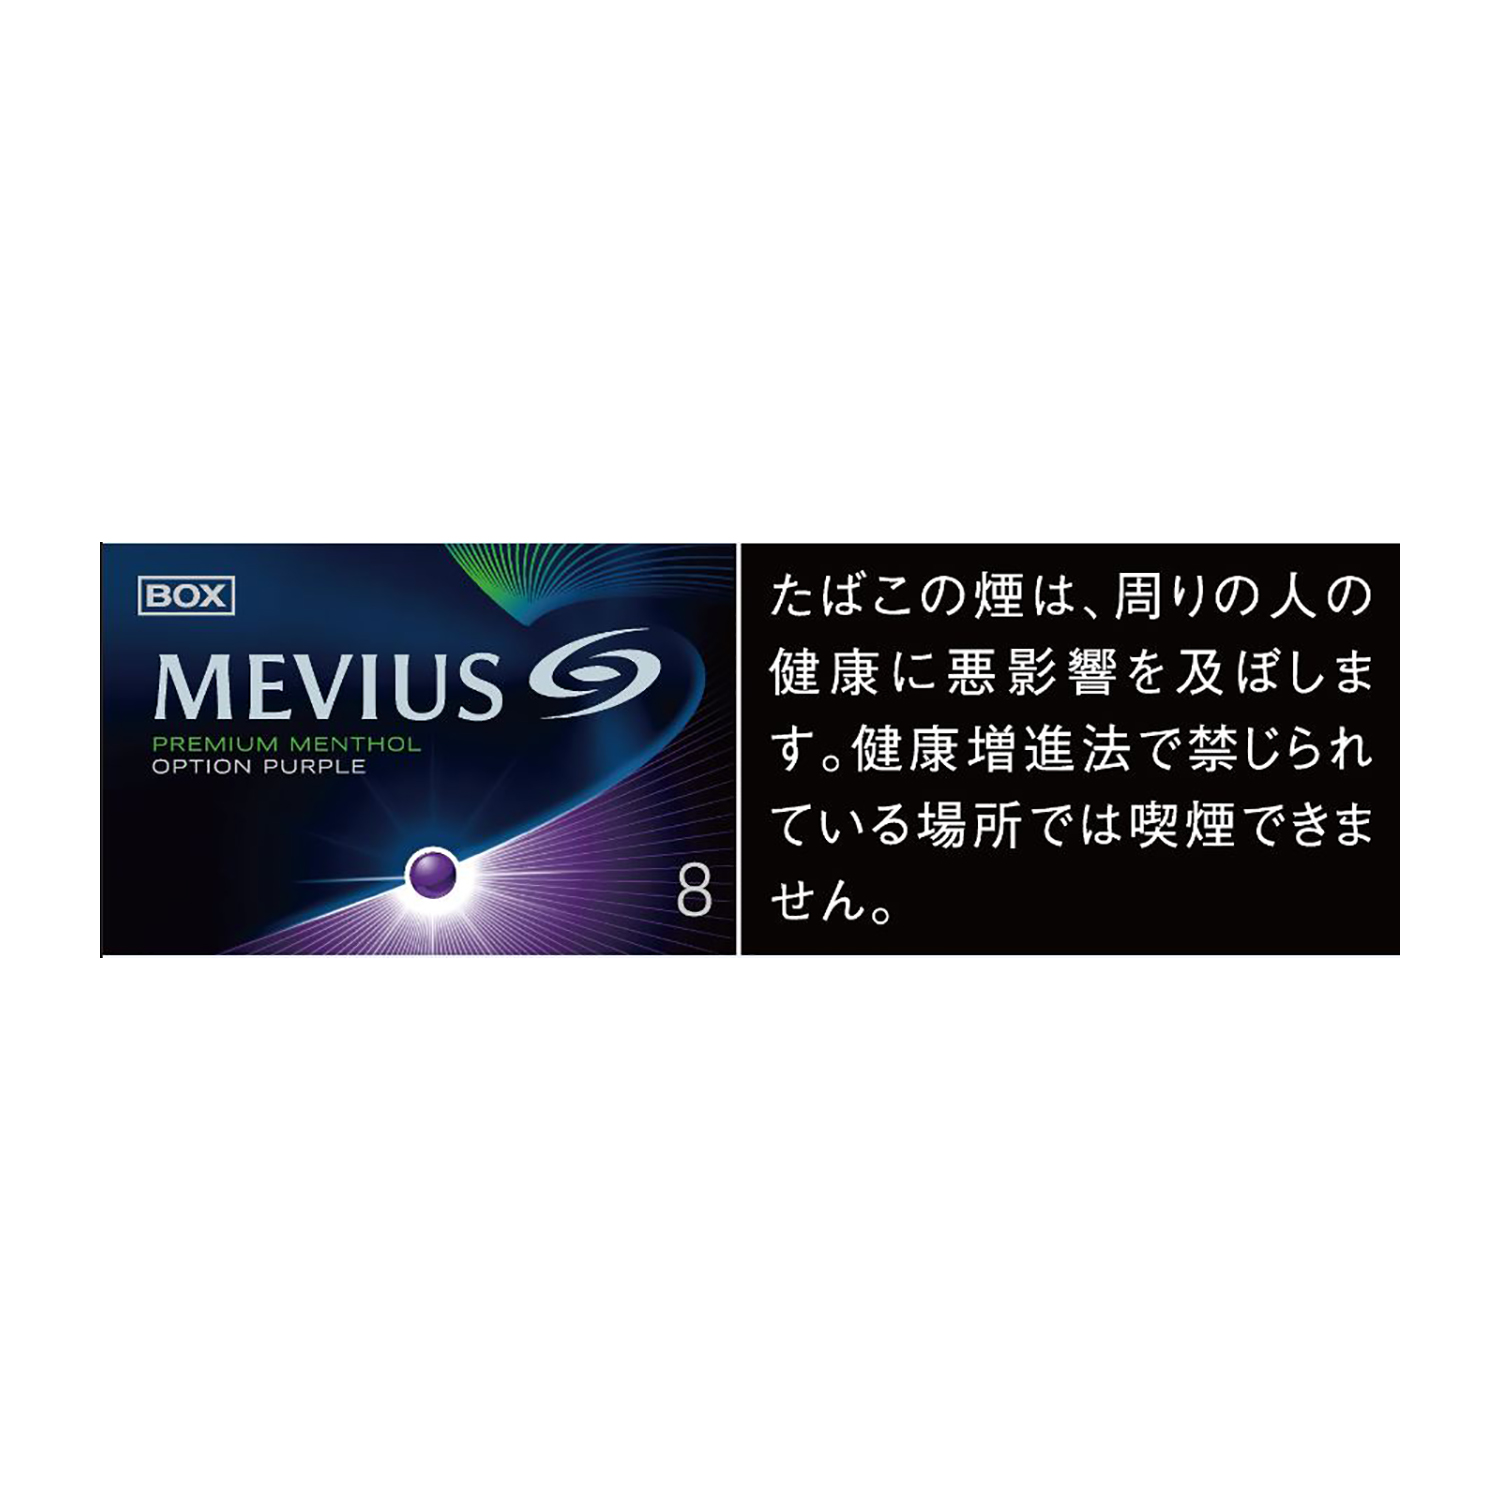 MEVIUS PREMIUM MENTHOL OPTION PURPLE 8 / Tar:8mg Nicotine:0.7mg